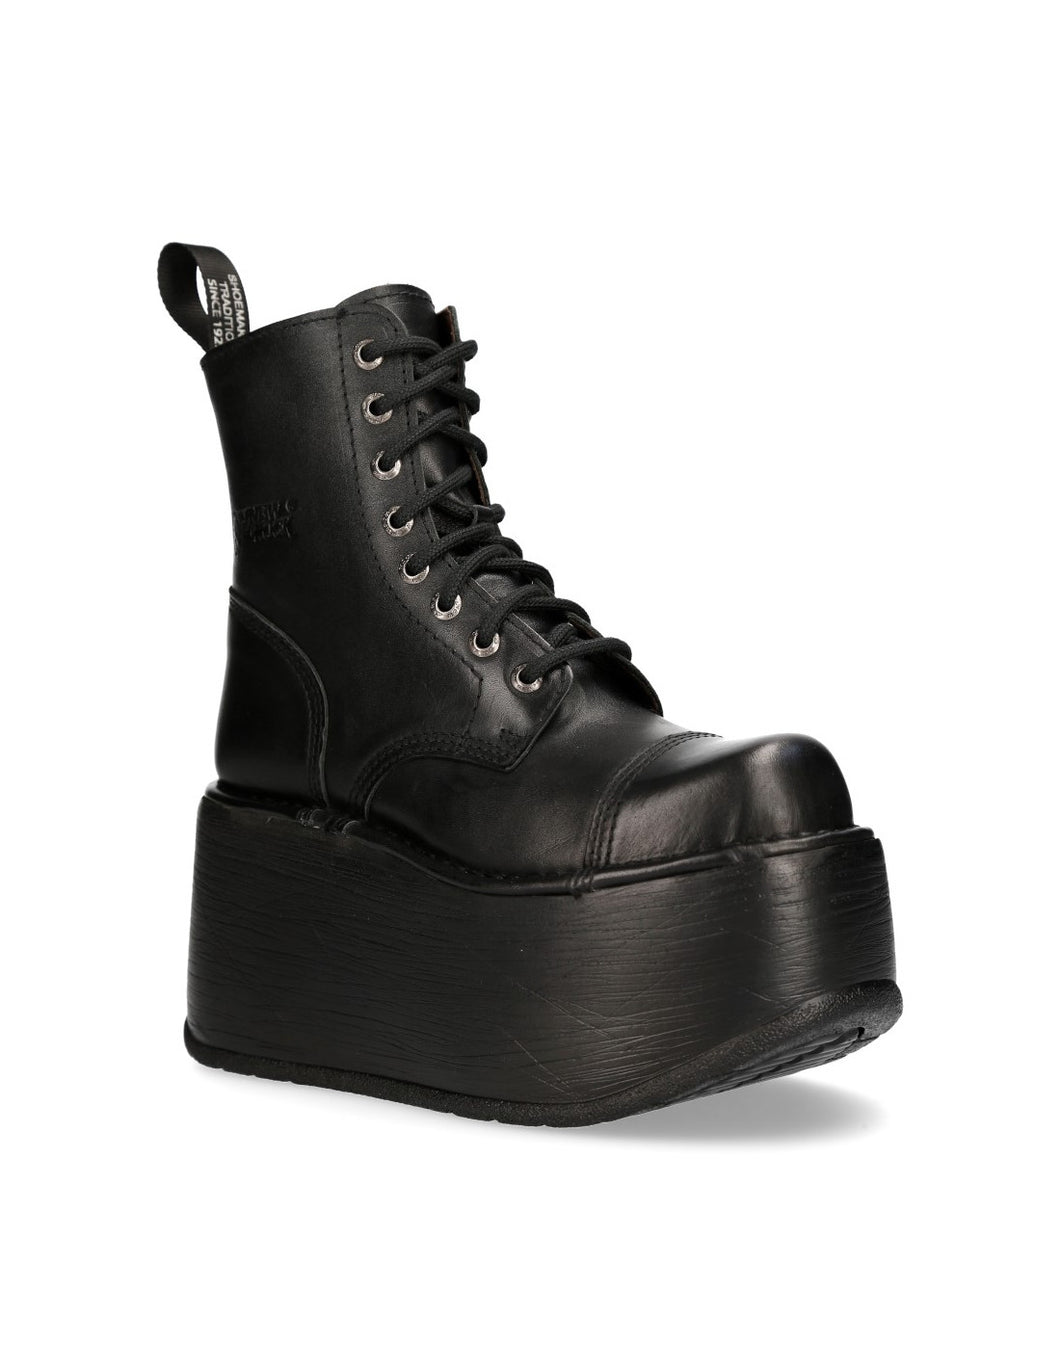 New Rock Schuhe Gothic Cyber Boots Plateauschuhe M-MILI083C-C24